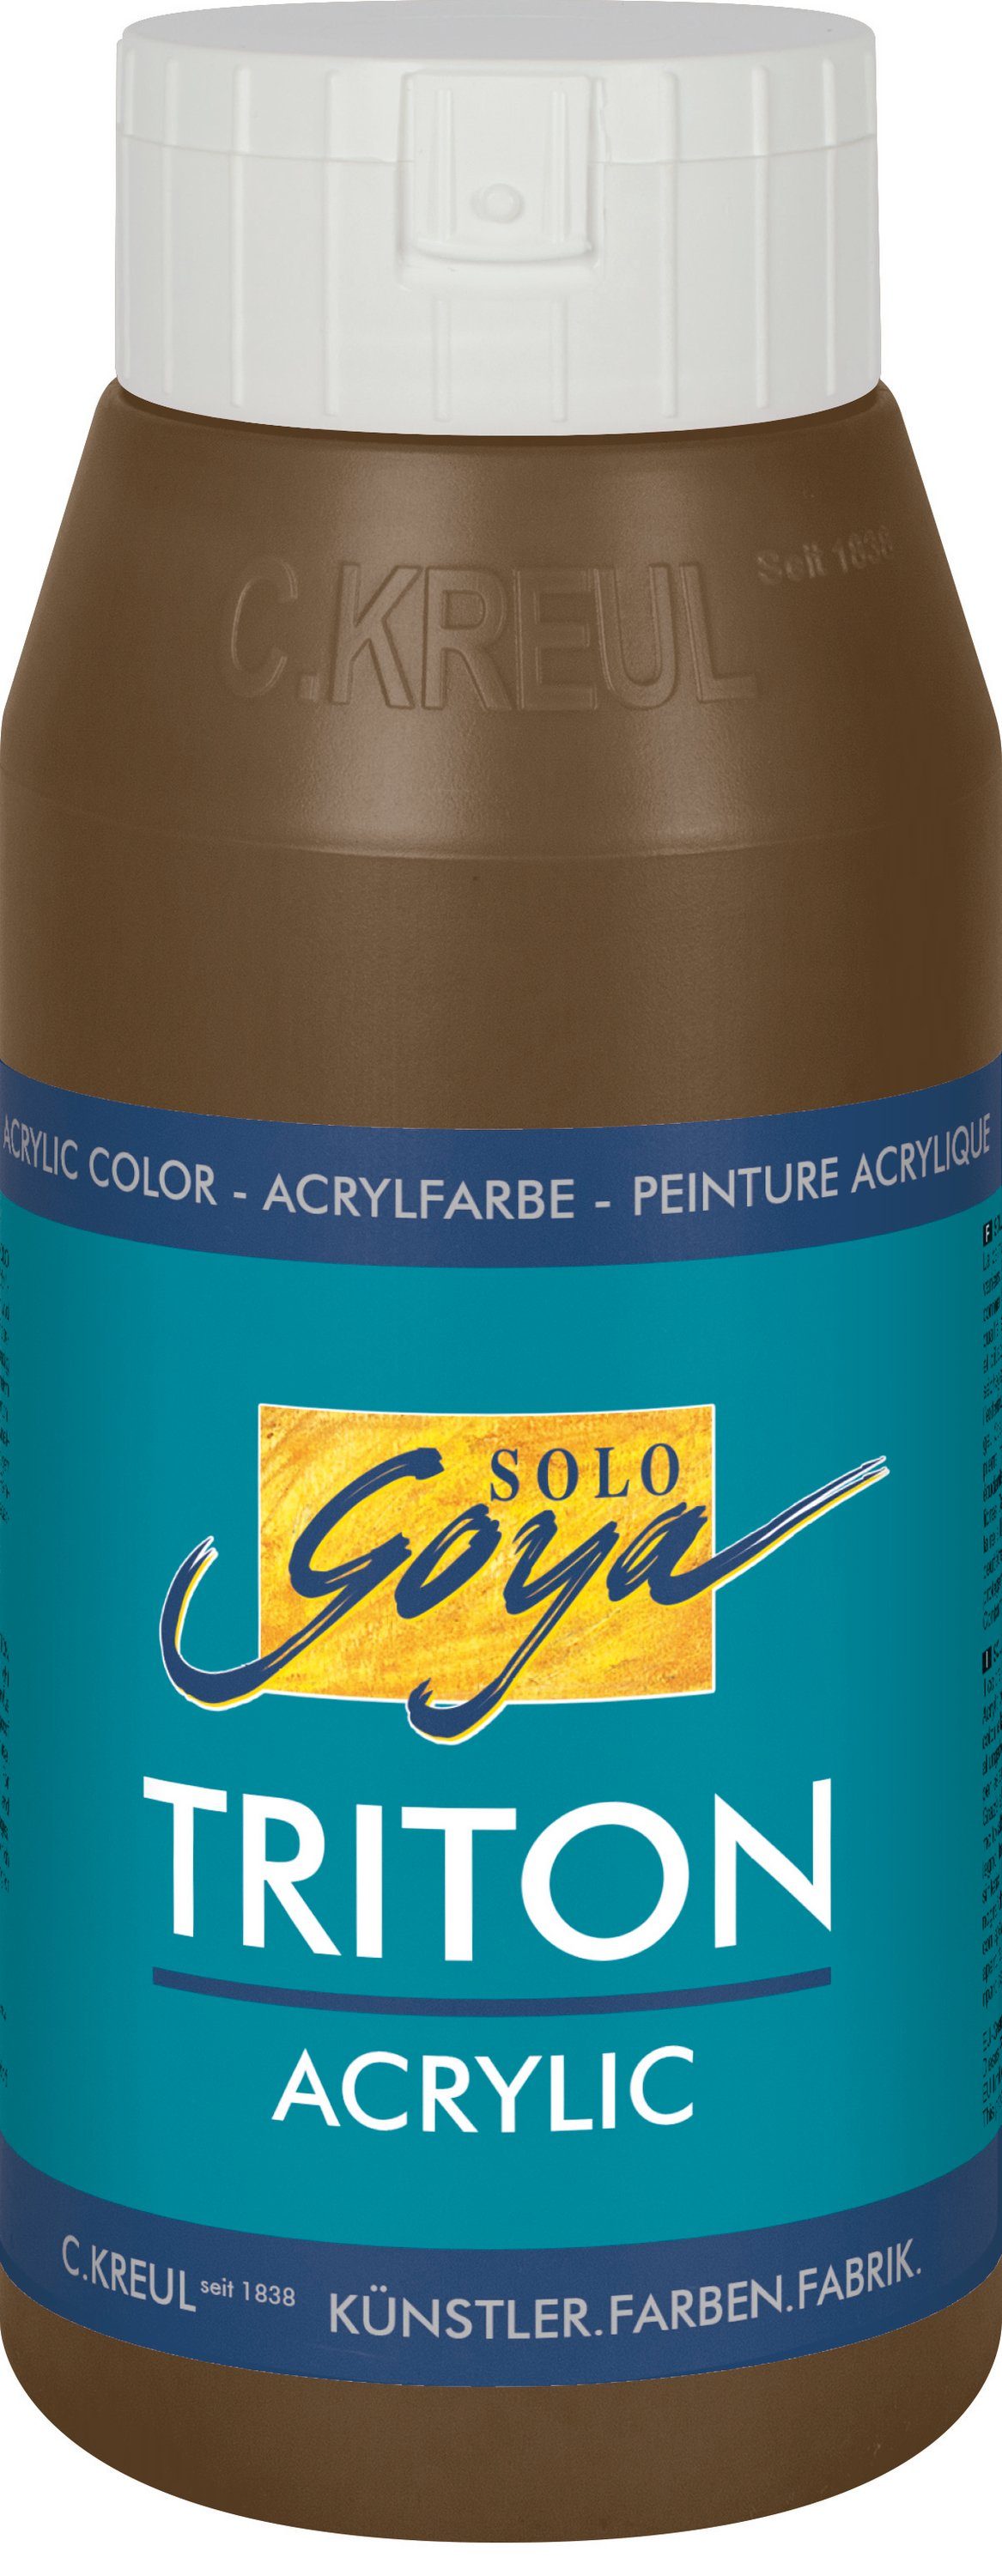 Kreul Acrylfarbe Solo Goya Triton Acrylic, 750 ml Havannabraun